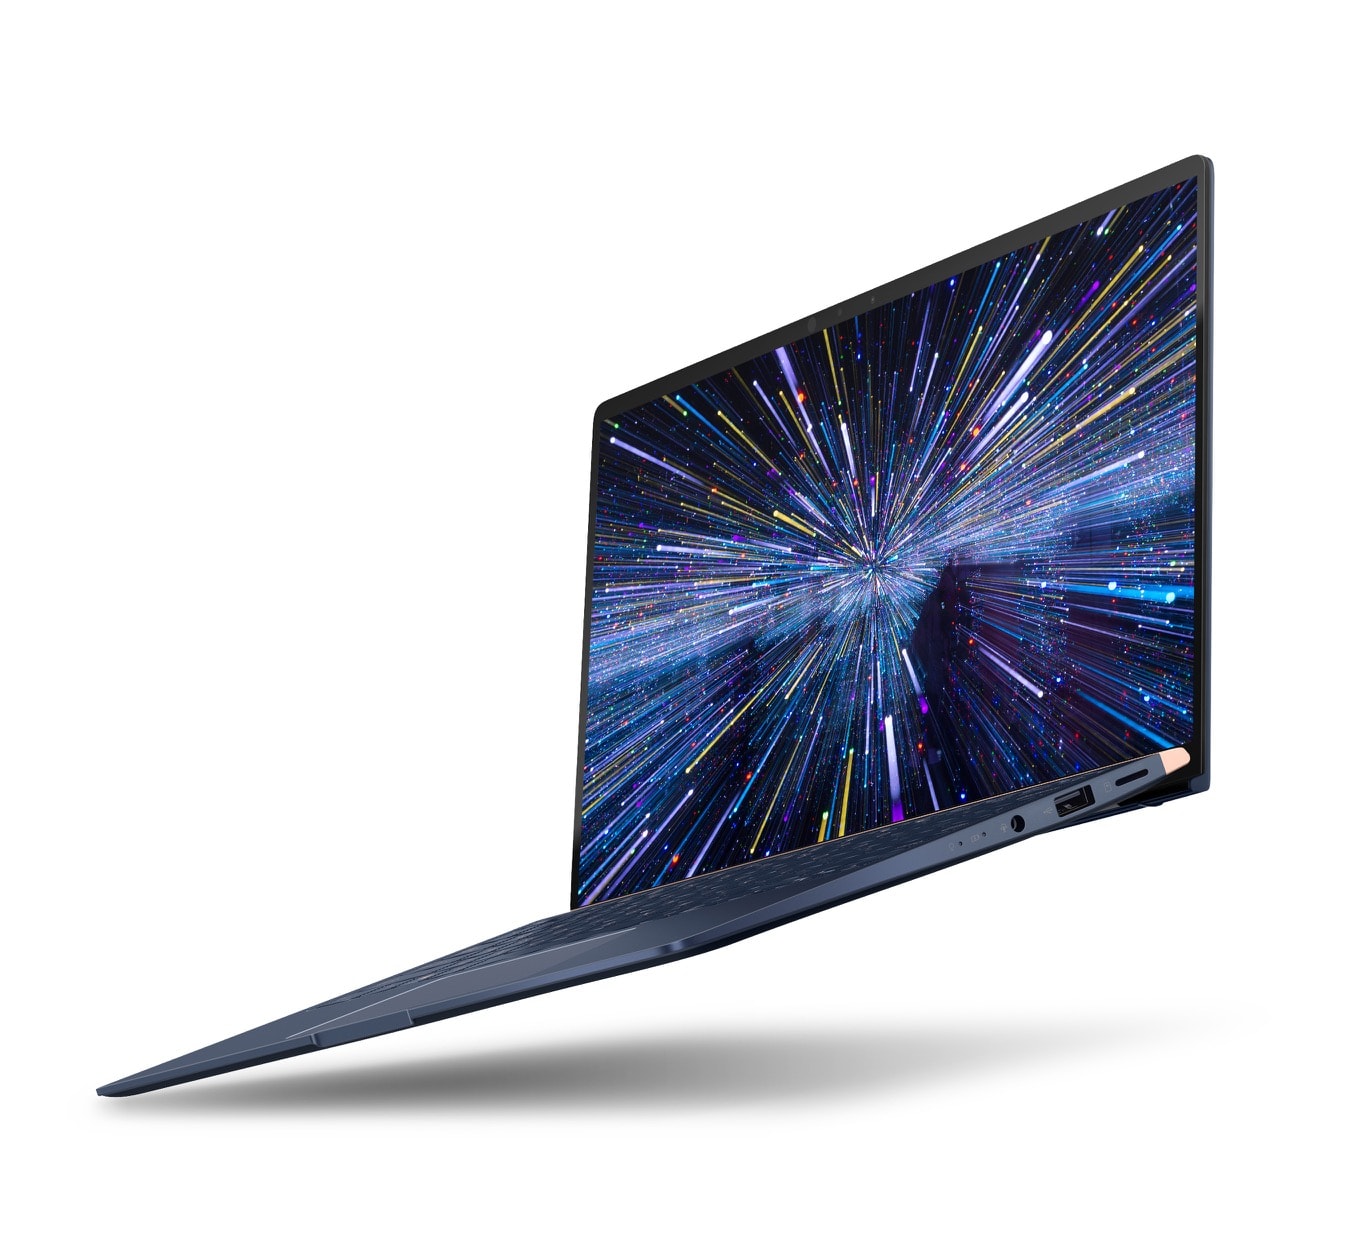 ASUS ZenBook 13 Ultra-Slim Laptop, 13.3” Full HD WideView, 8th Gen Intel  Core i5-8265U, 8GB LPDDR3, 512GB PCIe SSD, Backlit KB, Fingerprint, Slate